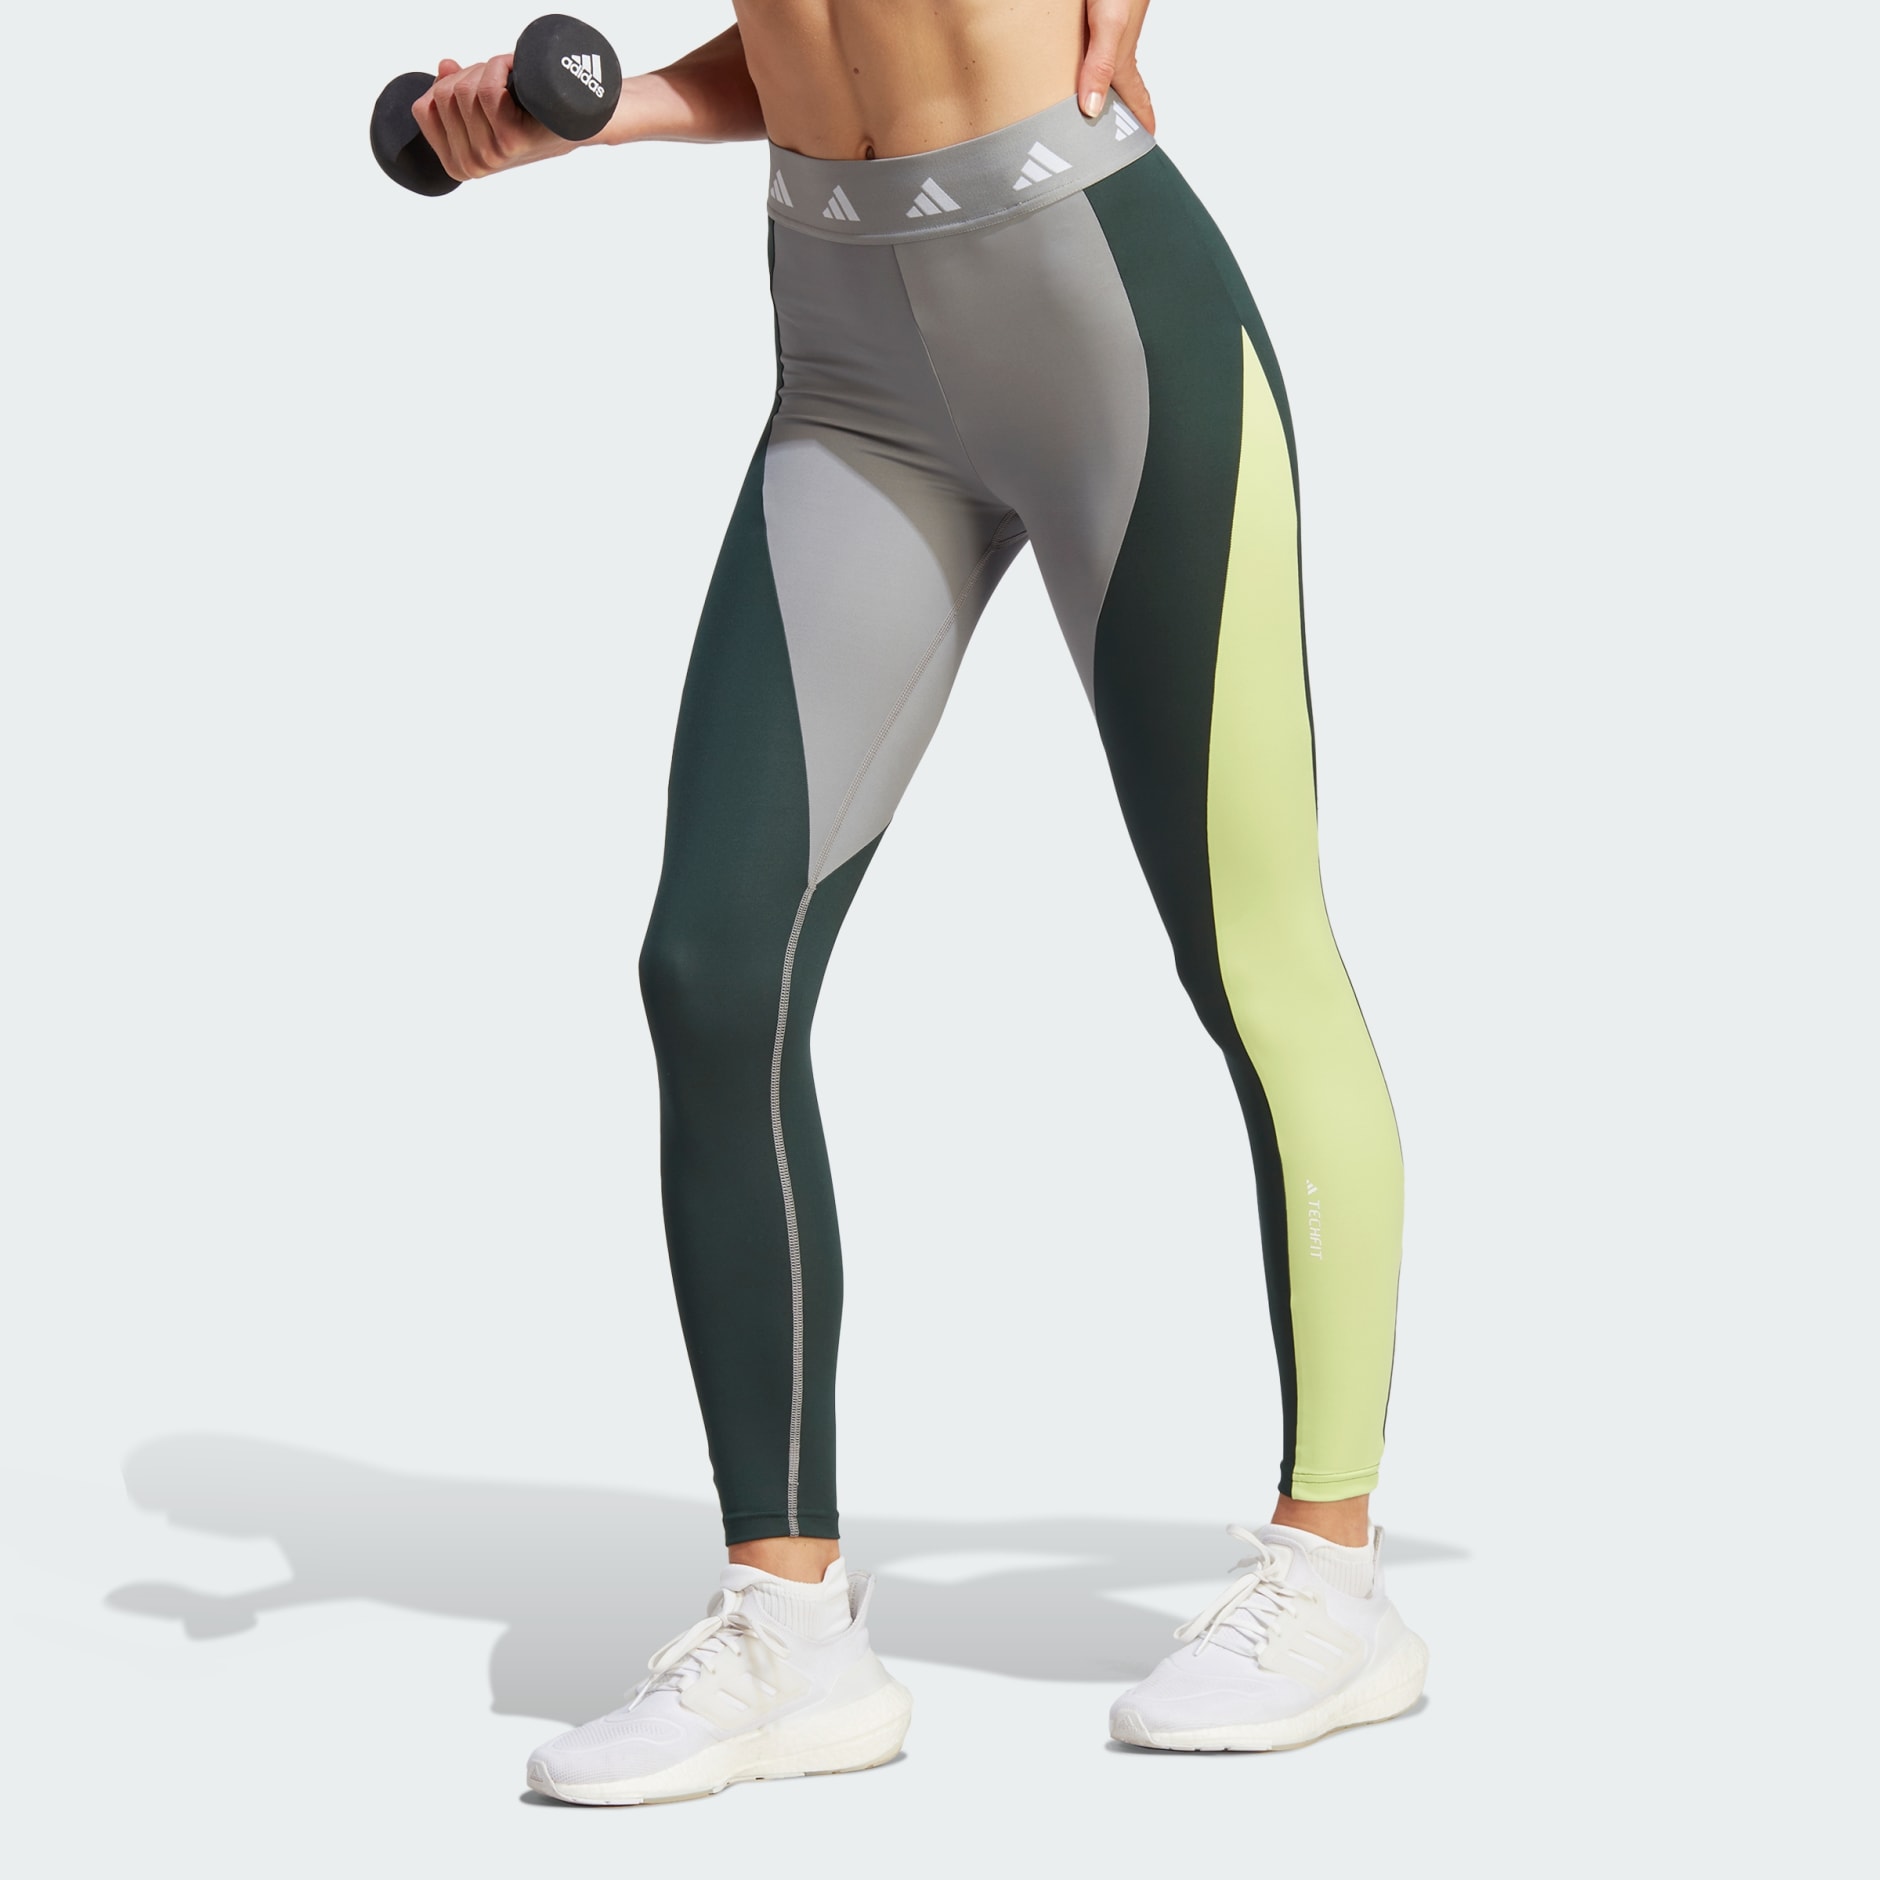 Gym Leggings – SWY Brand